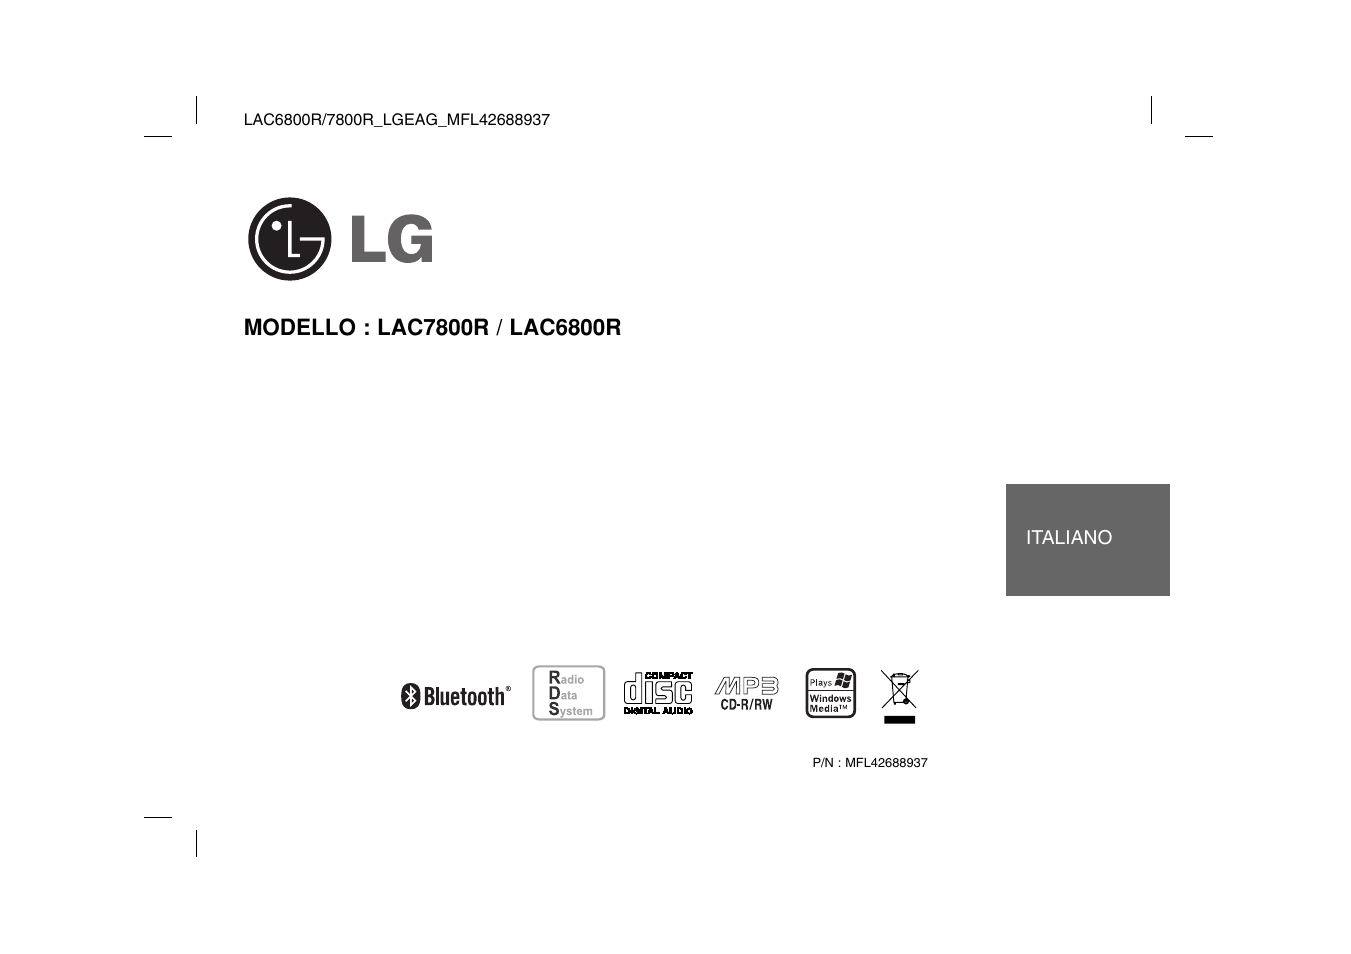 LG LAC7800R Manuale d'uso | Pagine: 20